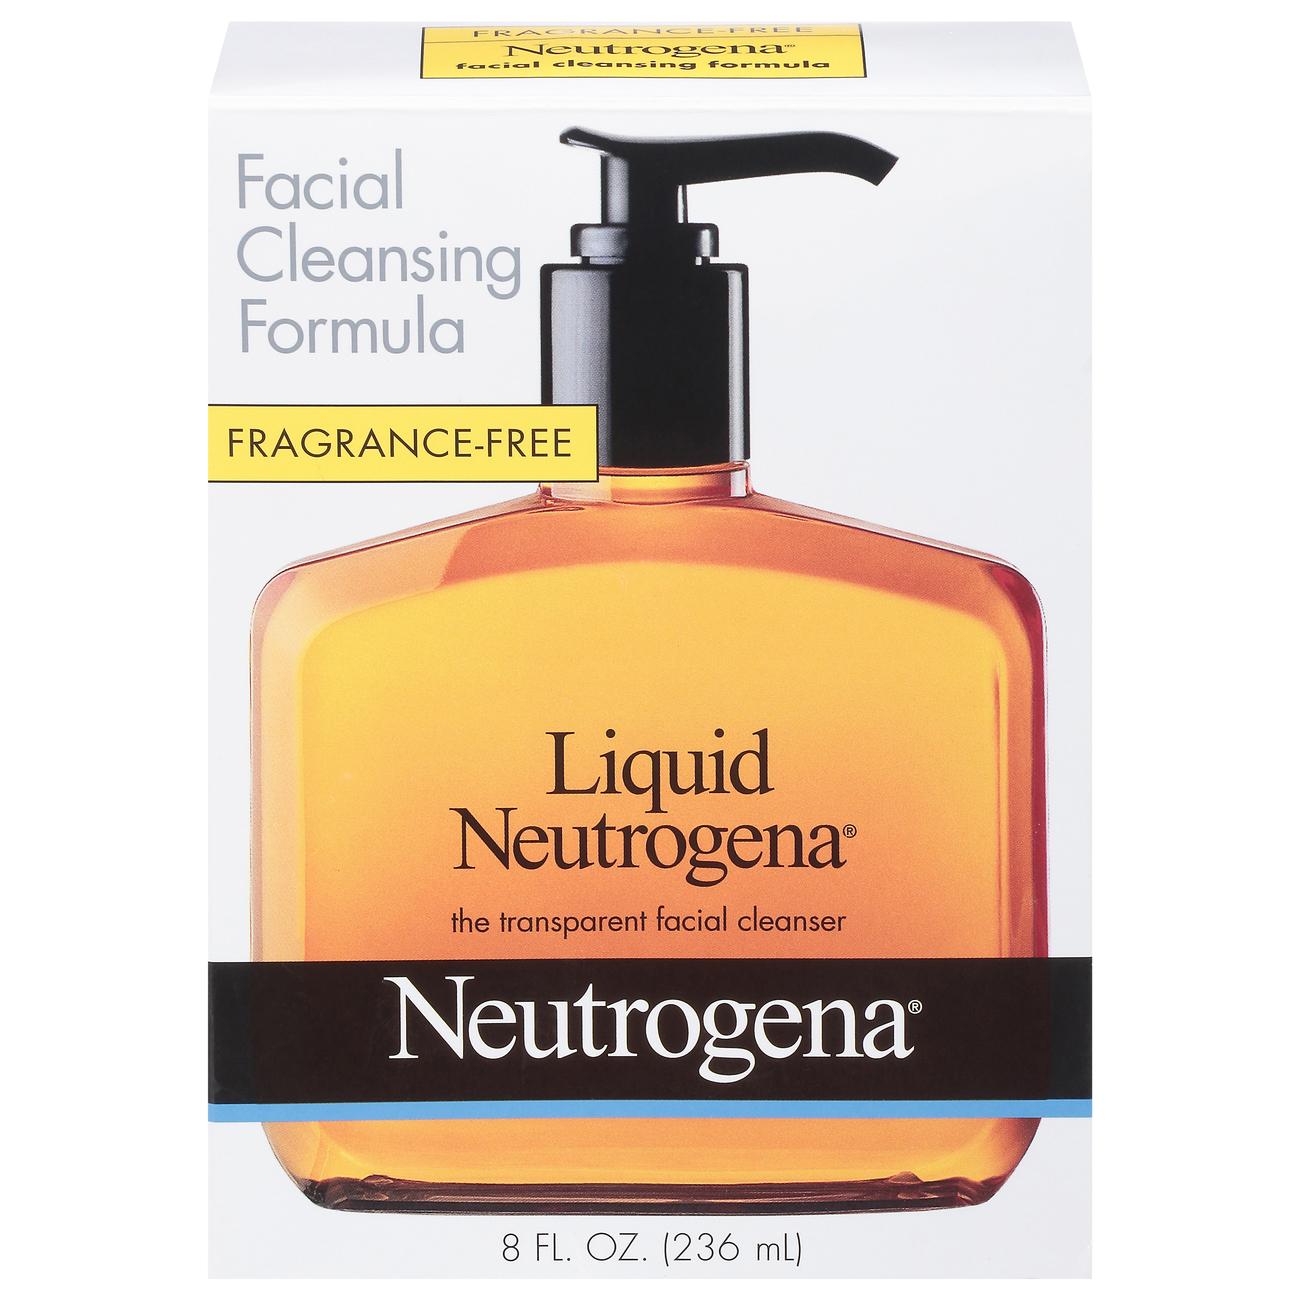 Neutrogena Liquid Facial Cleansing Formula; image 1 of 8